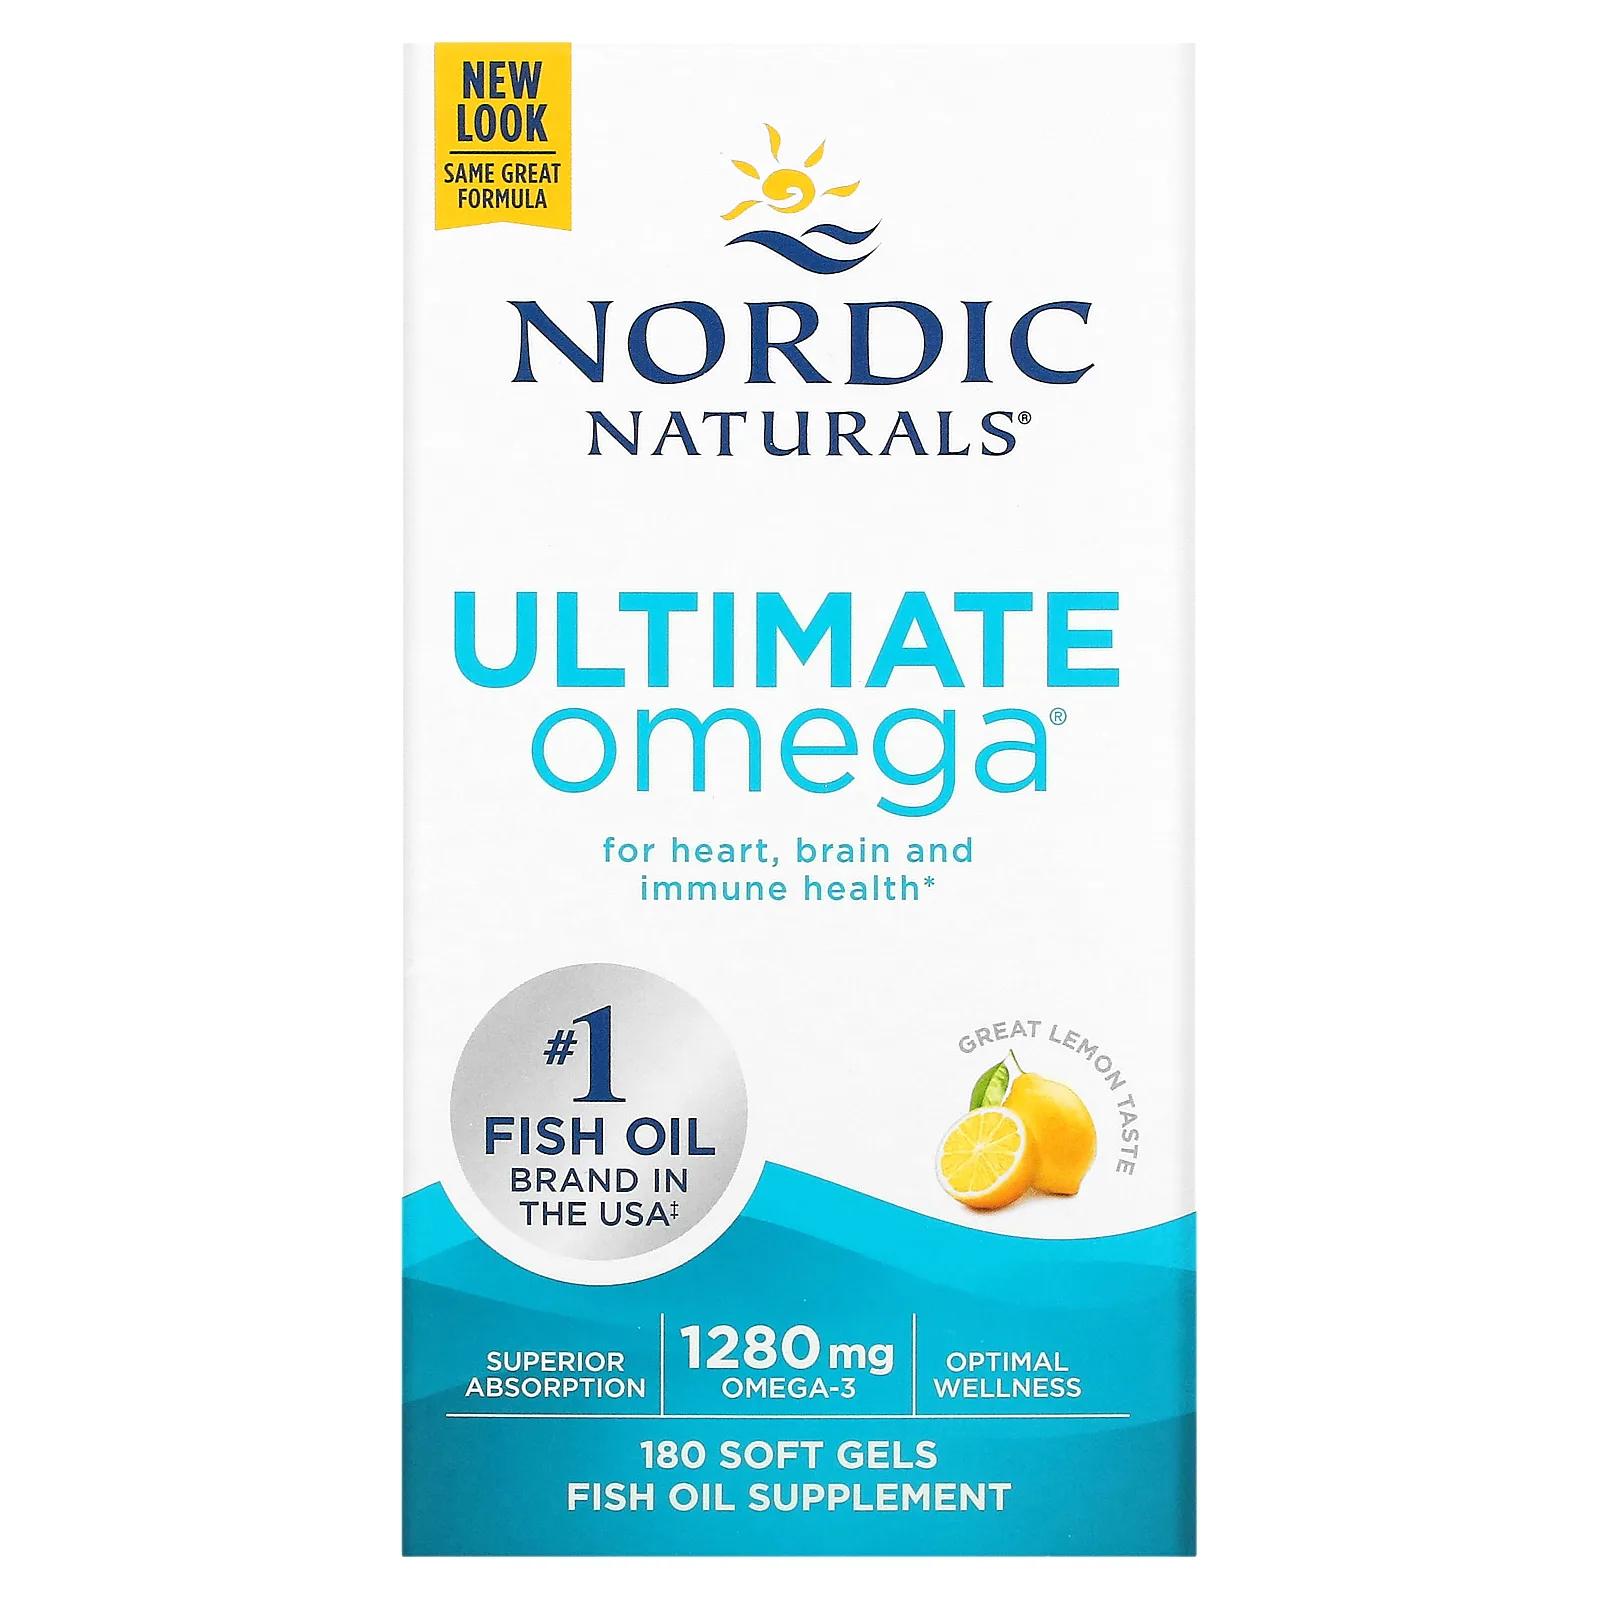 Nordic Naturals Ultimate Omega вкус лимона 1,280 мг 180 мягких капсул nordic naturals omega 3 690 мг 180 мягких капсул со вкусом лимона